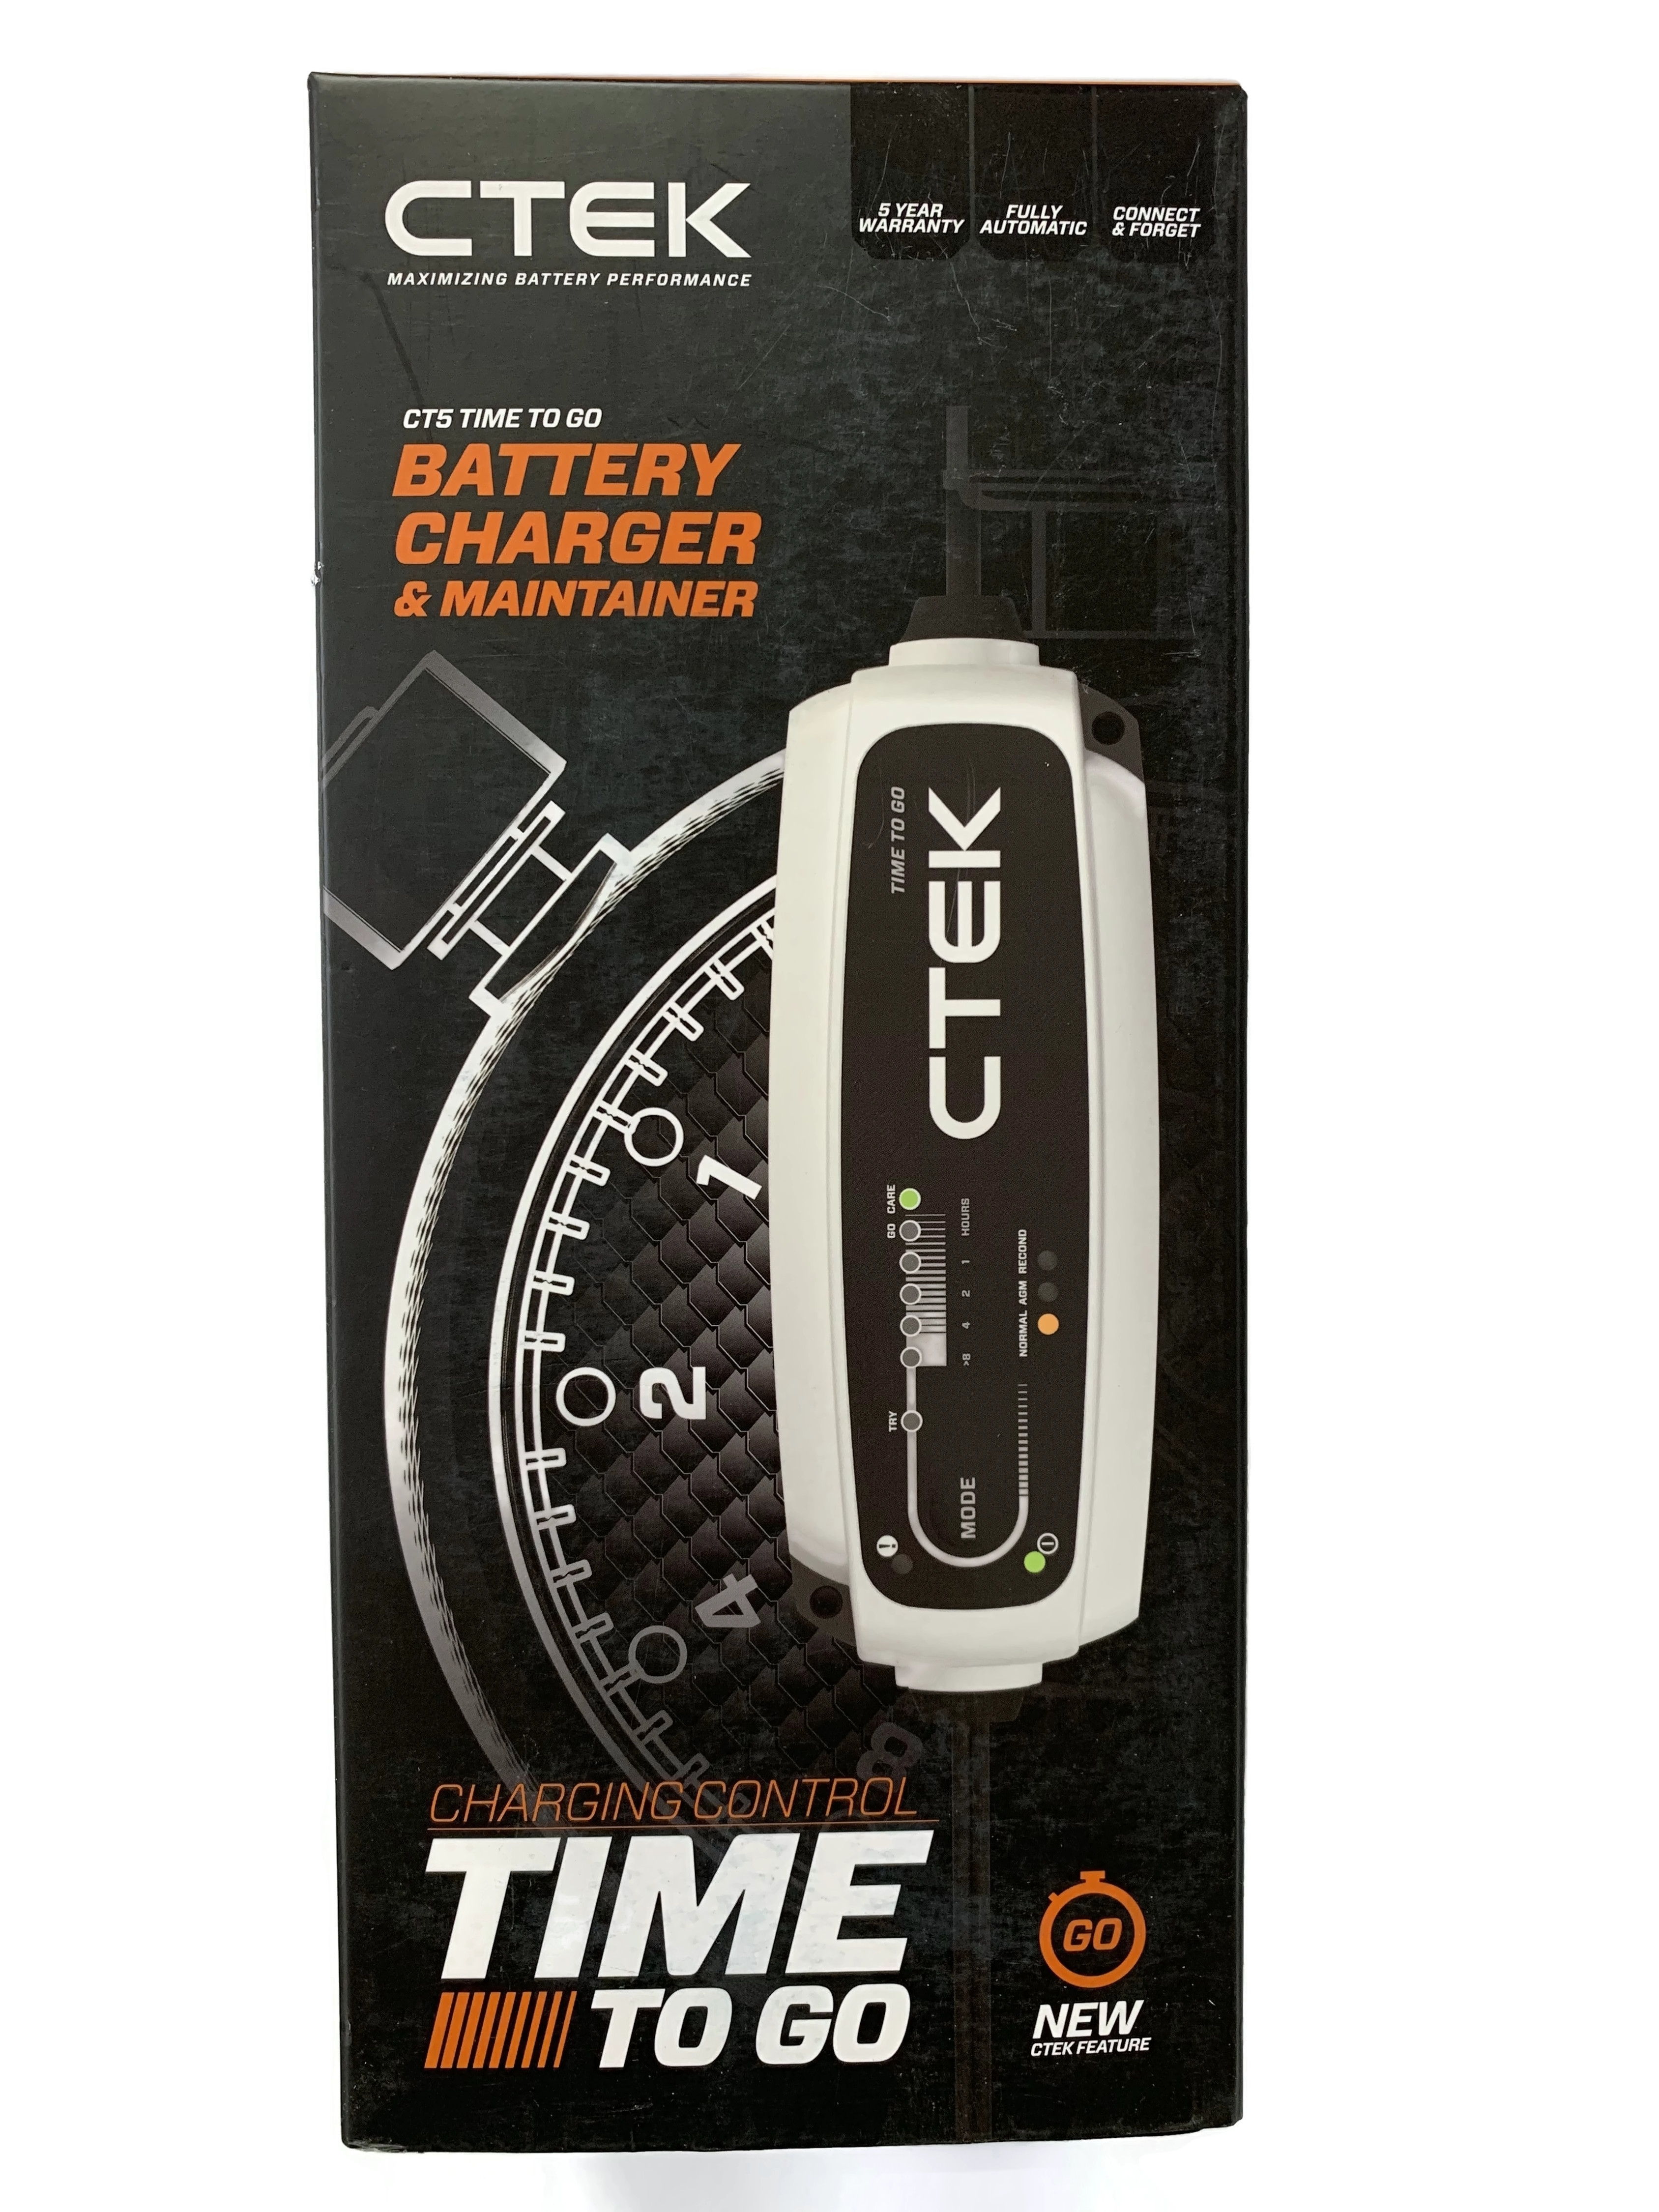 CTEK Batterie Ladegerät CT5 Time to Go Batterieladegerät